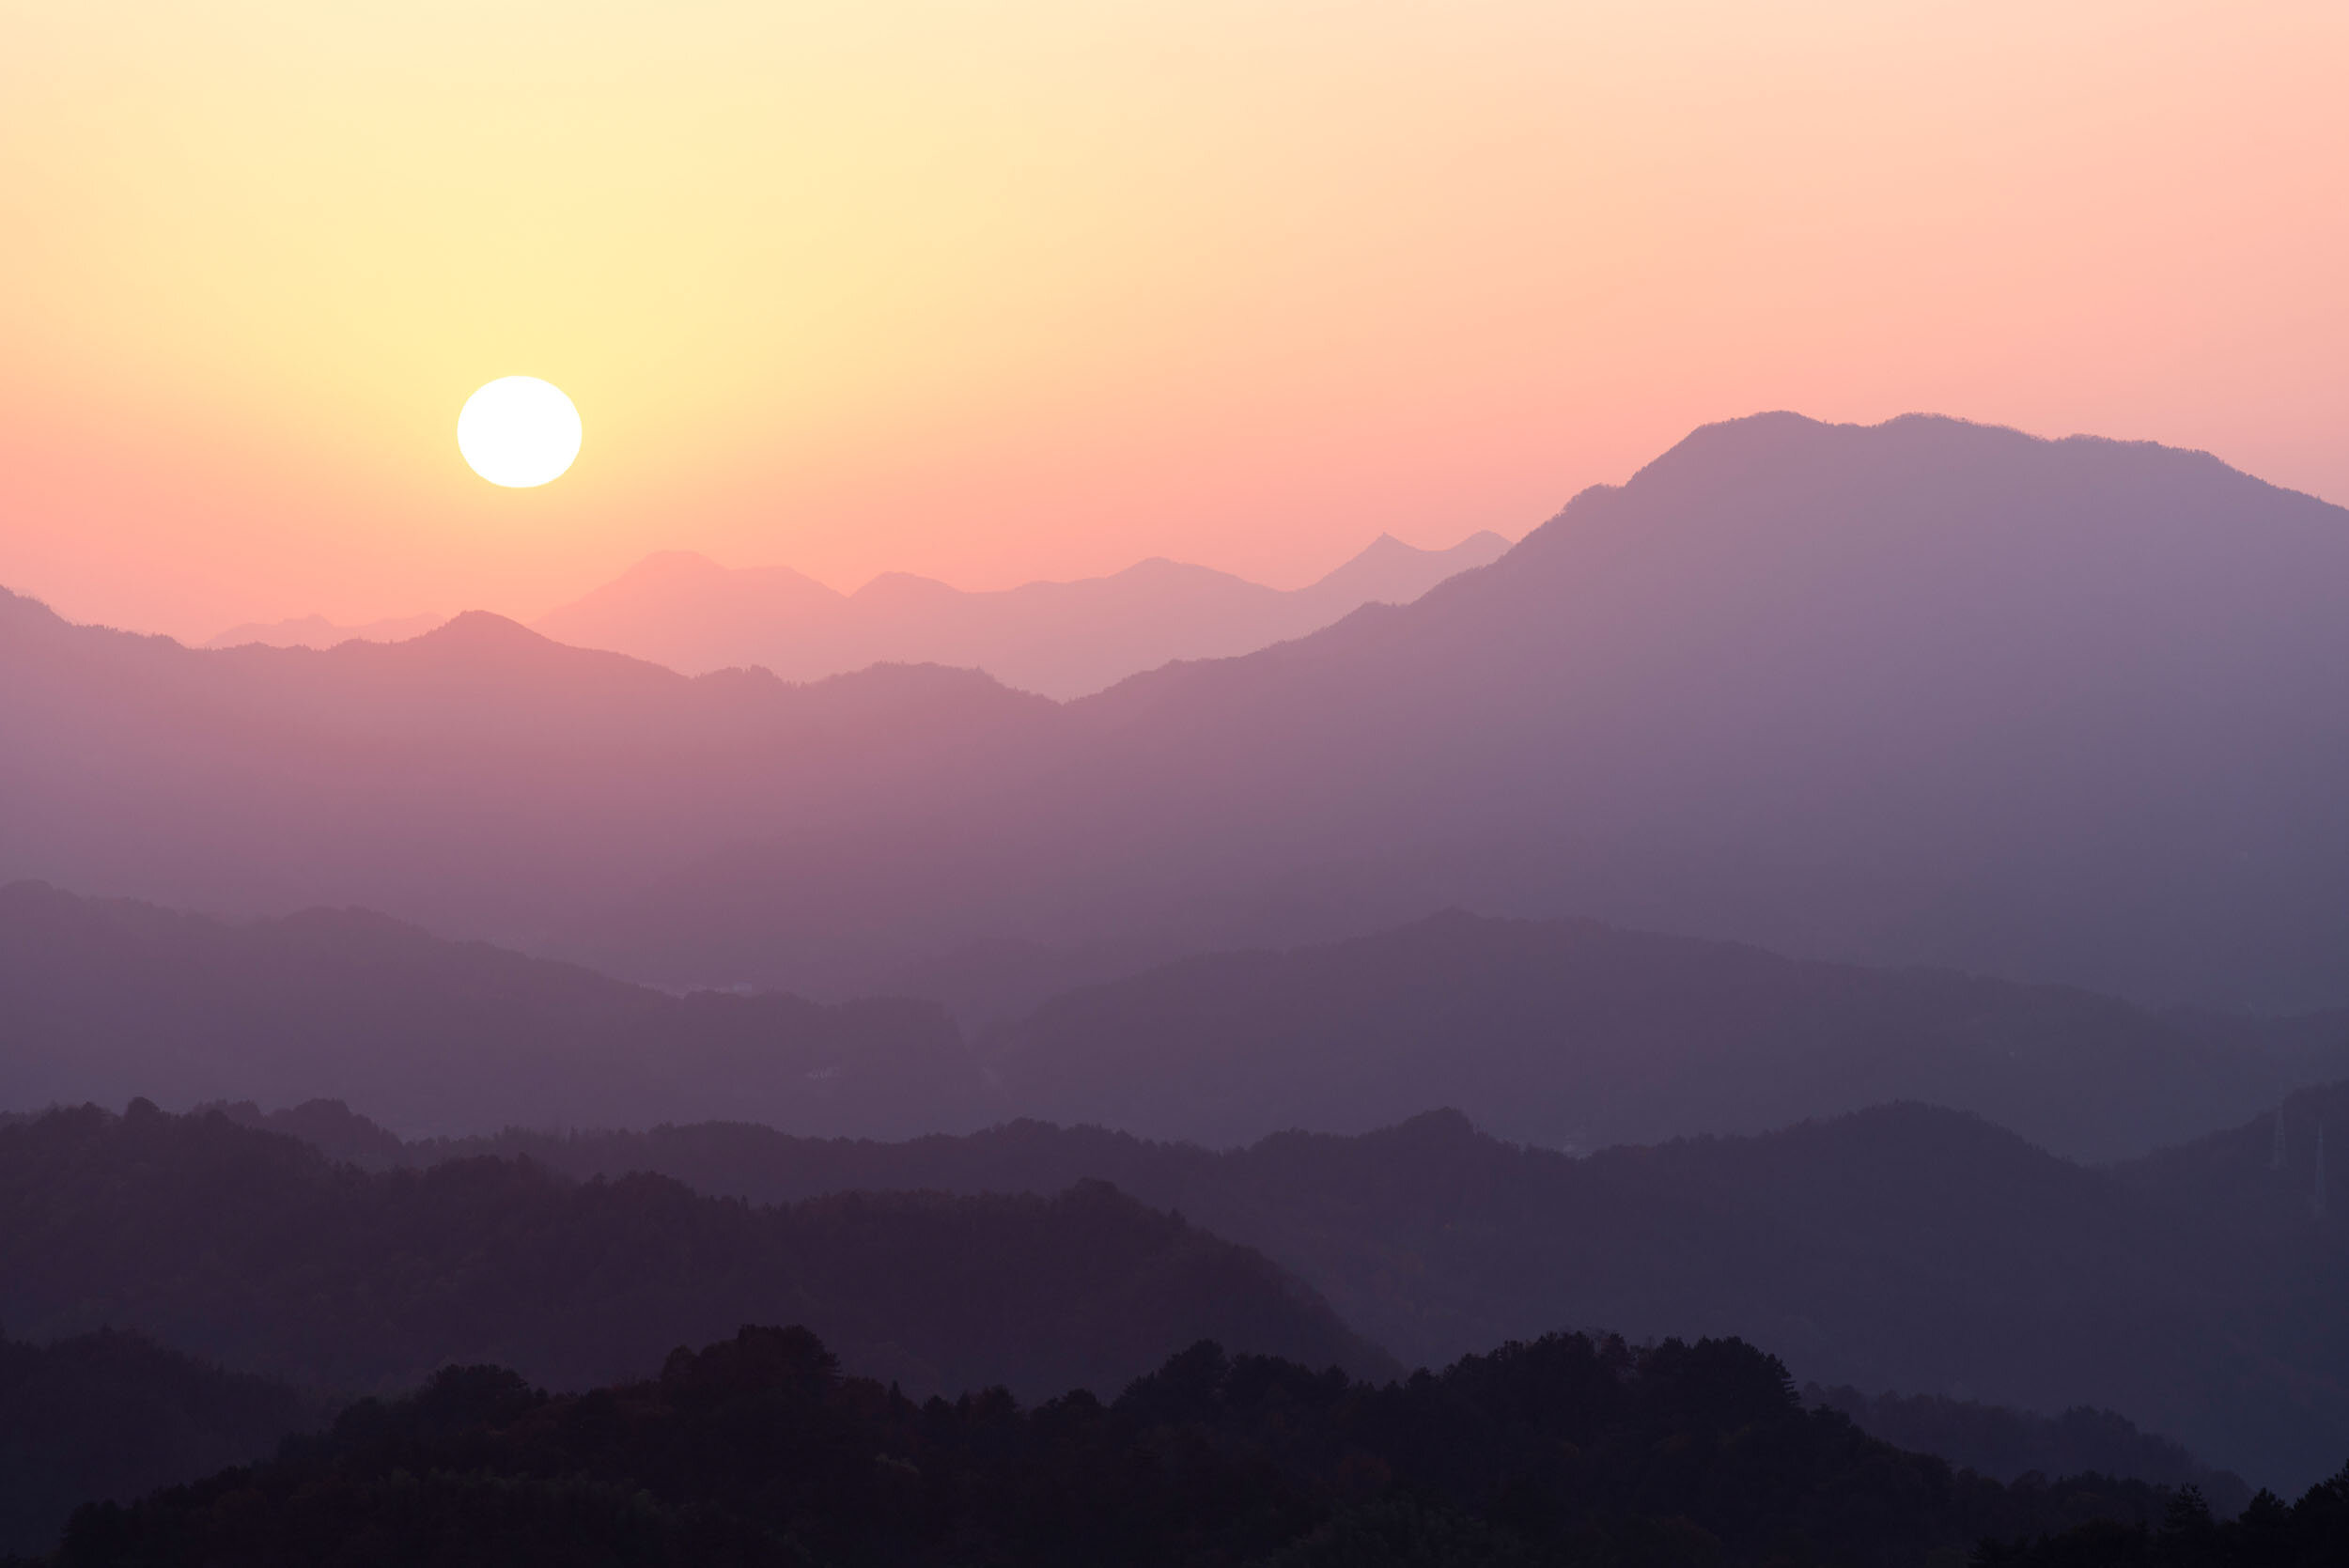 Sunset And Mountain Range / 群山日落